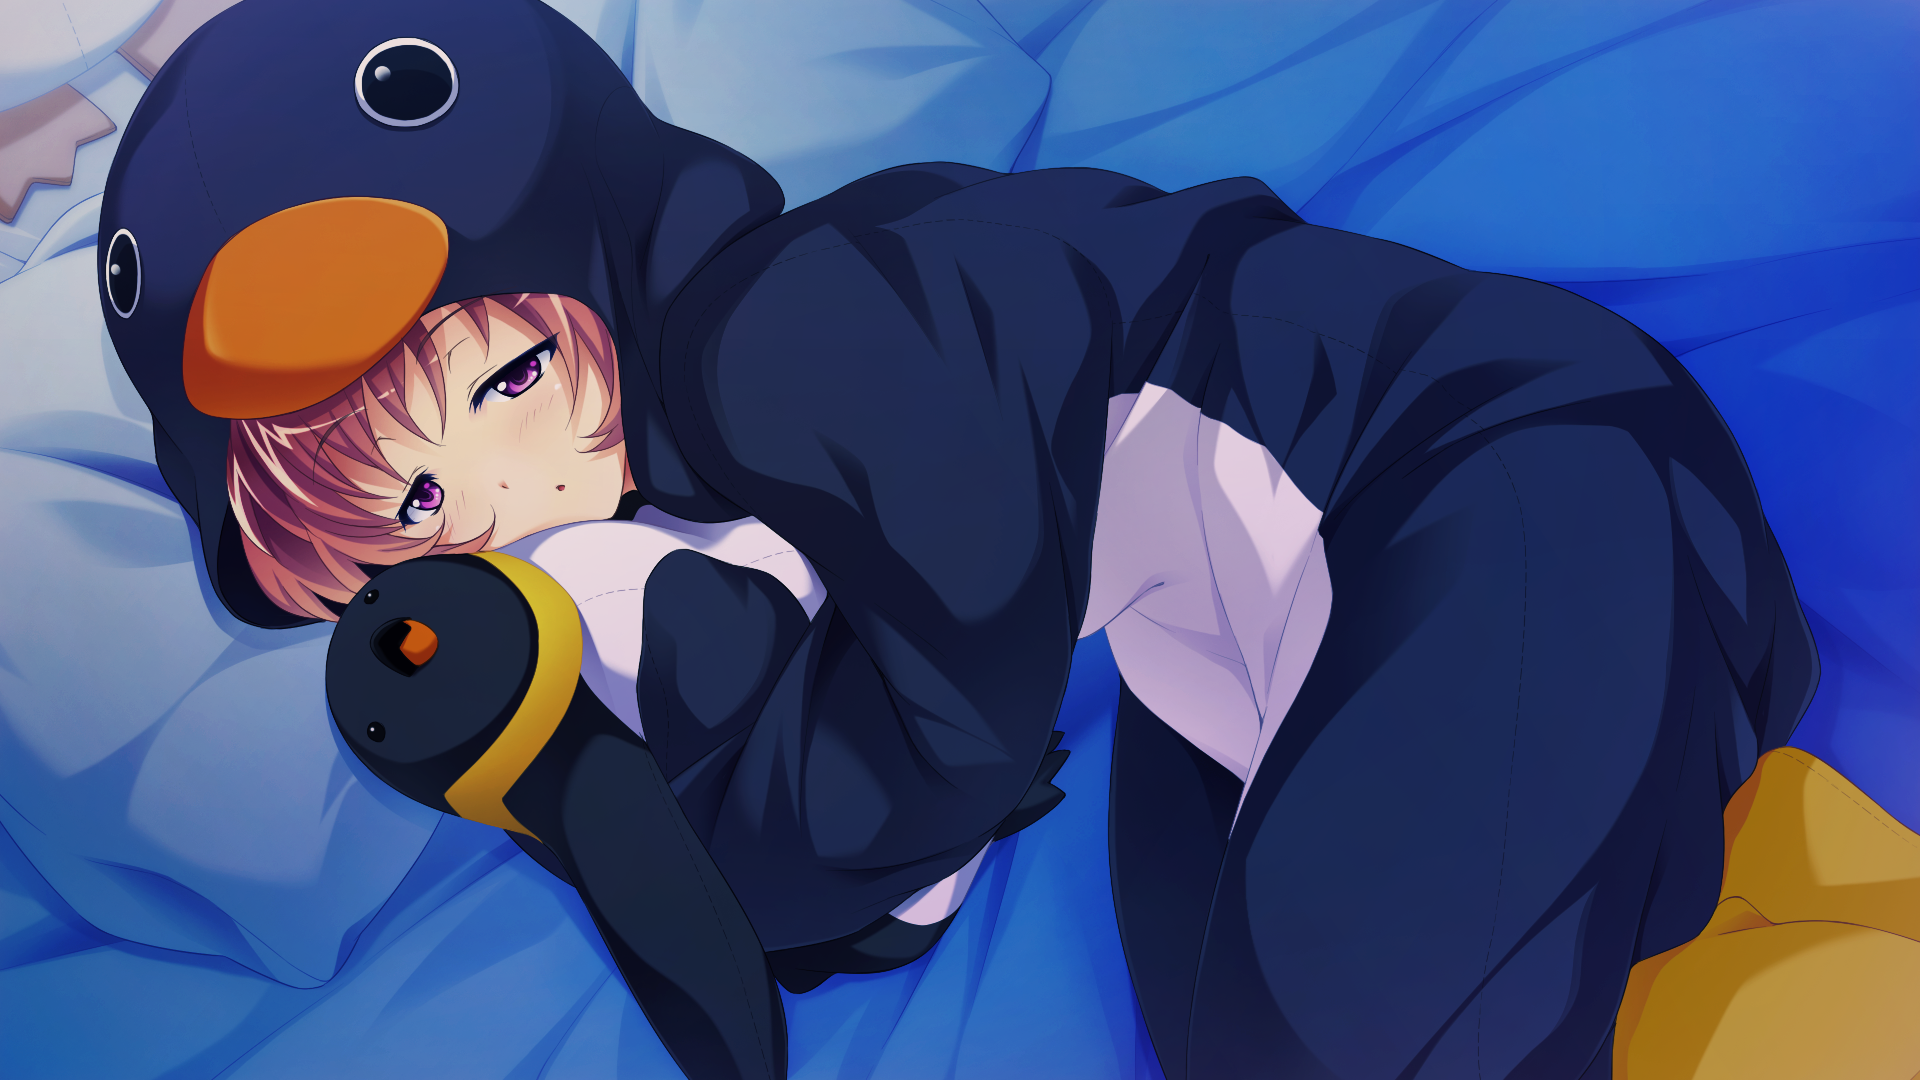 Anime 1920x1080 manga anime girls in bed anime purple eyes lying down looking at viewer